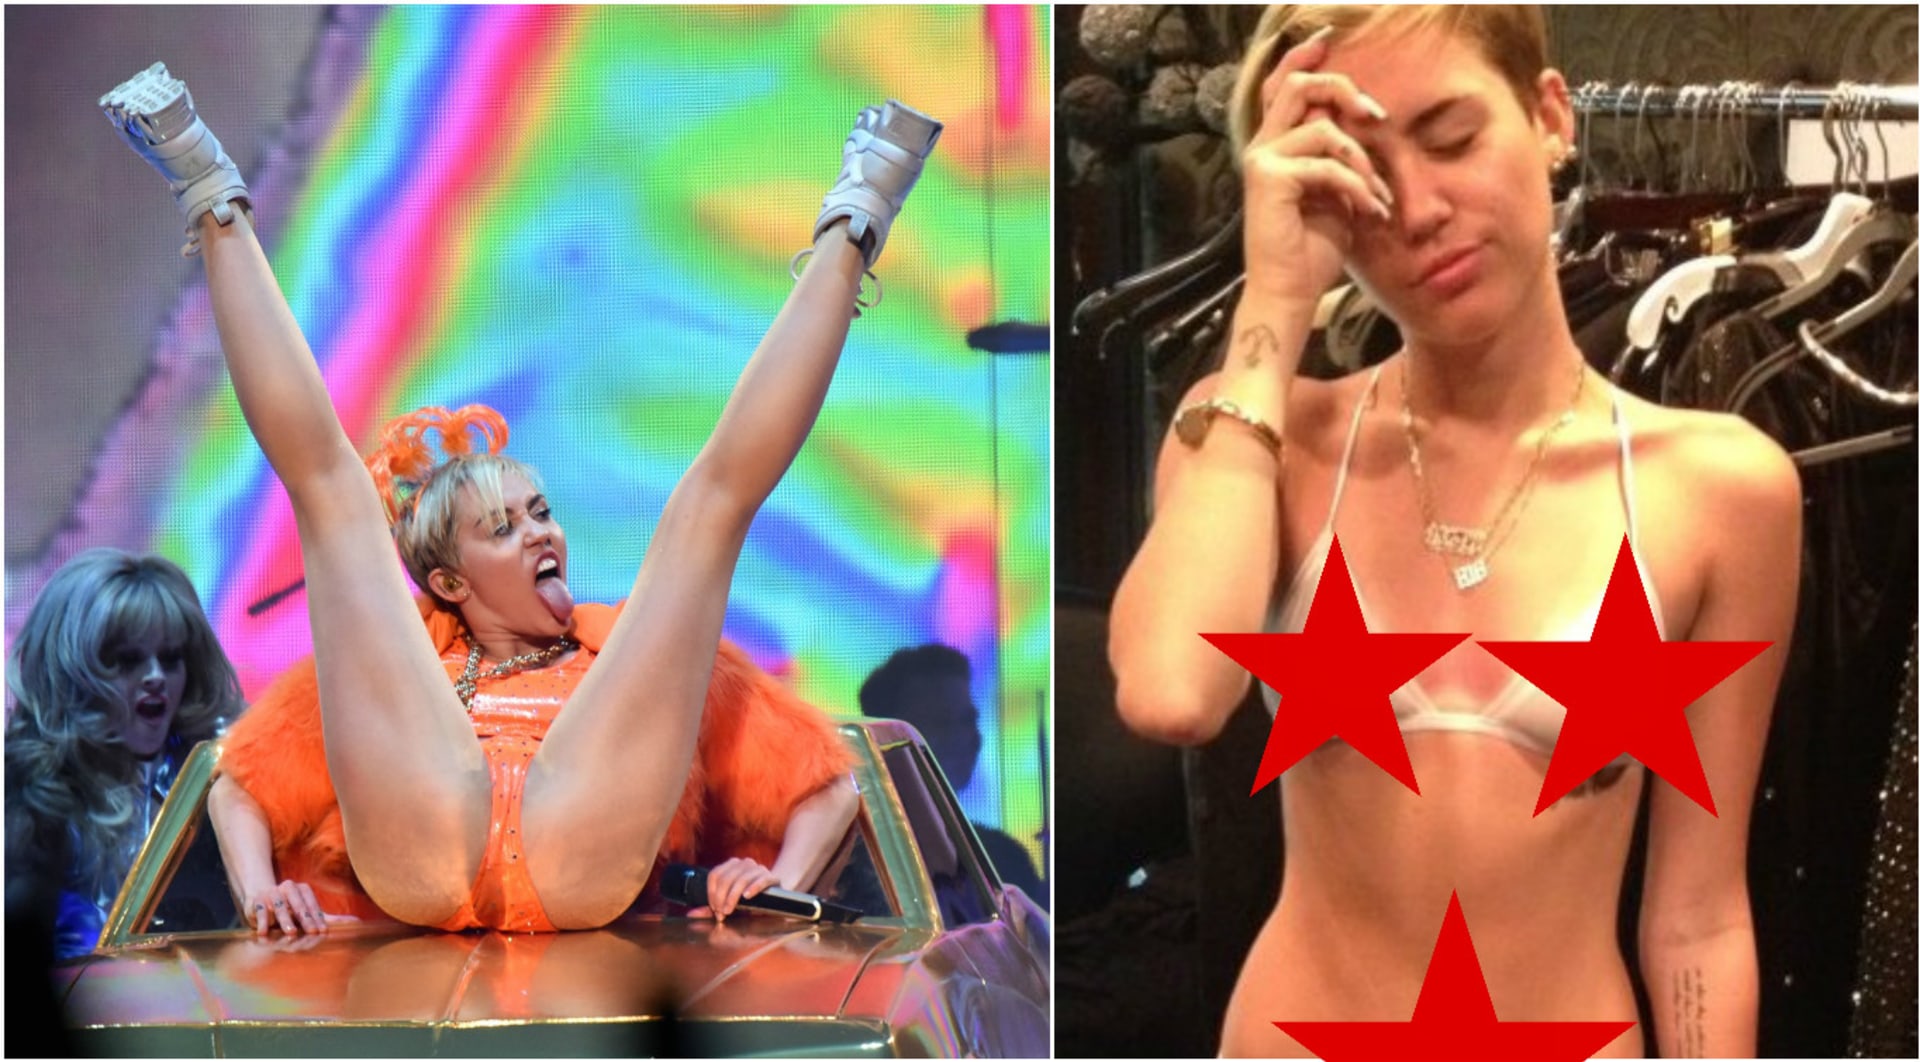 Miley Cyrus a uniklé fotky.